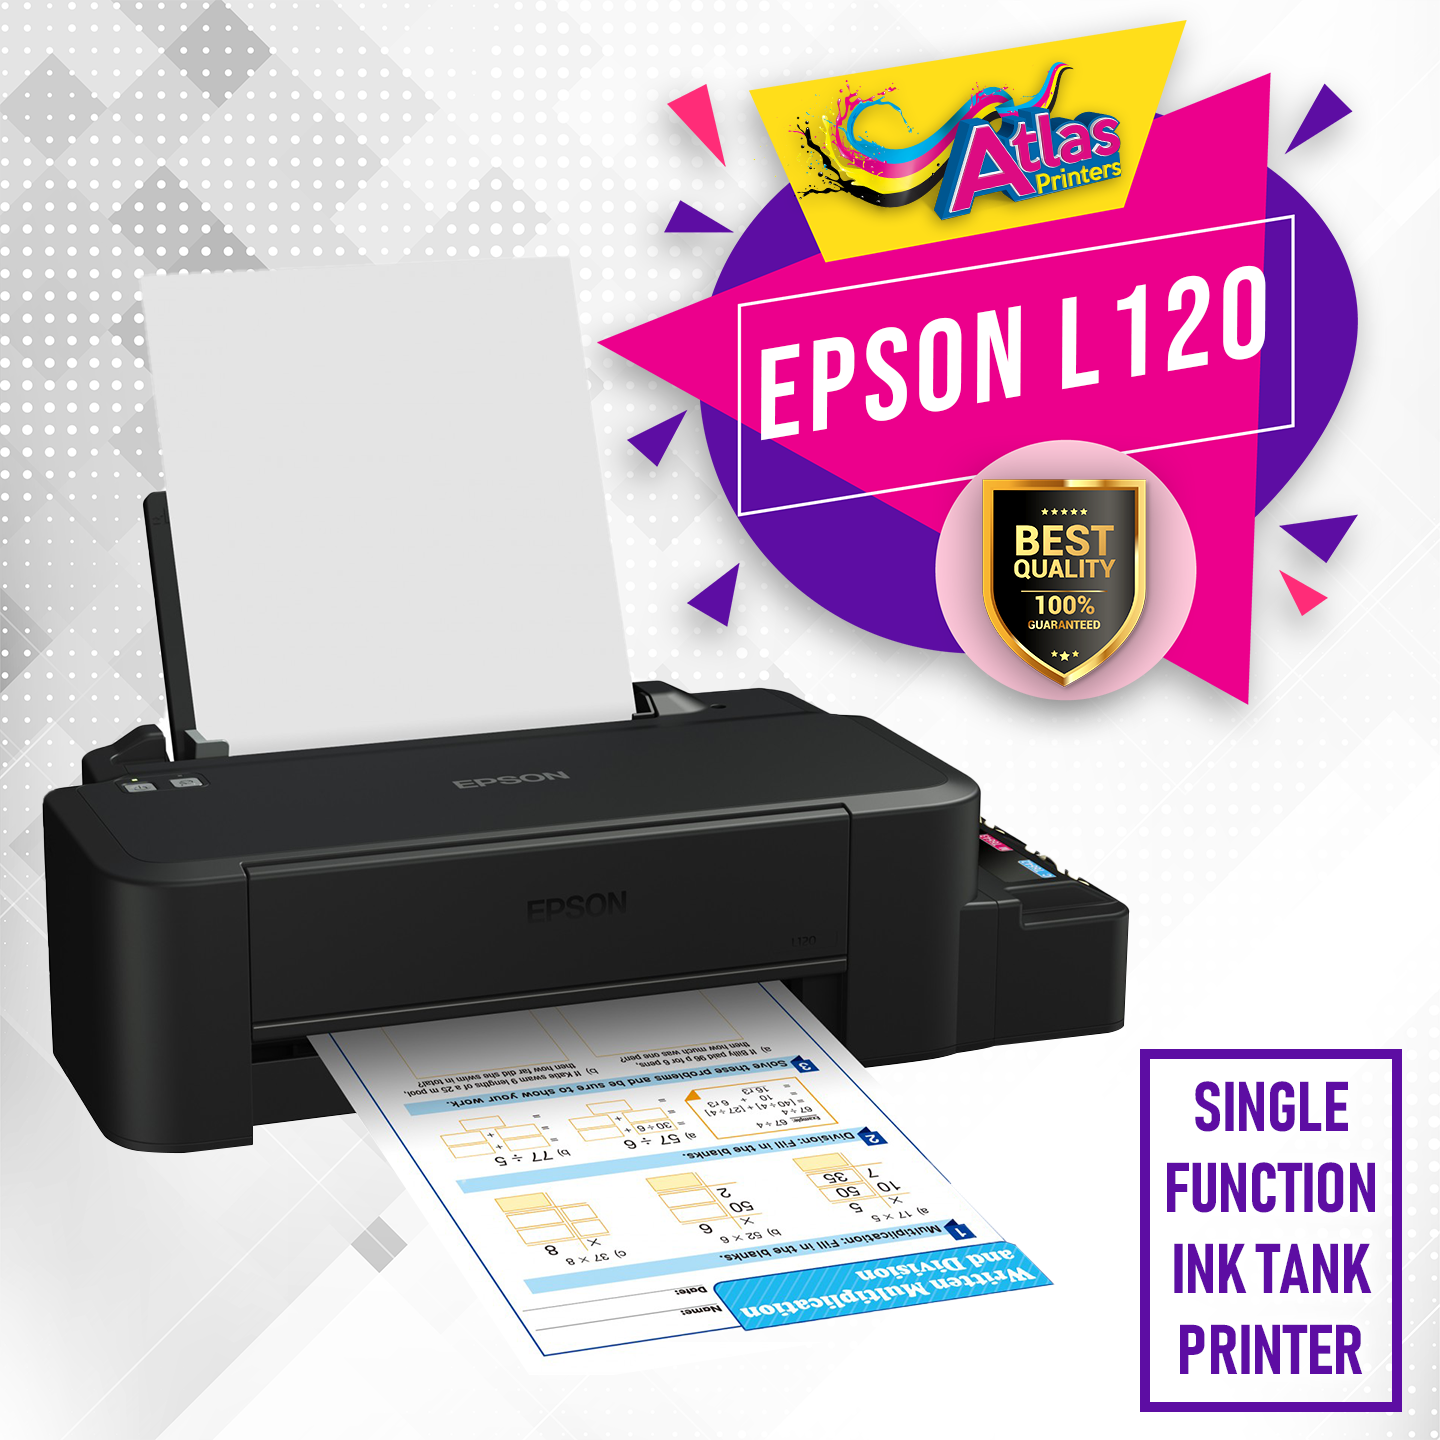 Epson L120 Single Function Ink Tank Printer Lazada Ph 0116